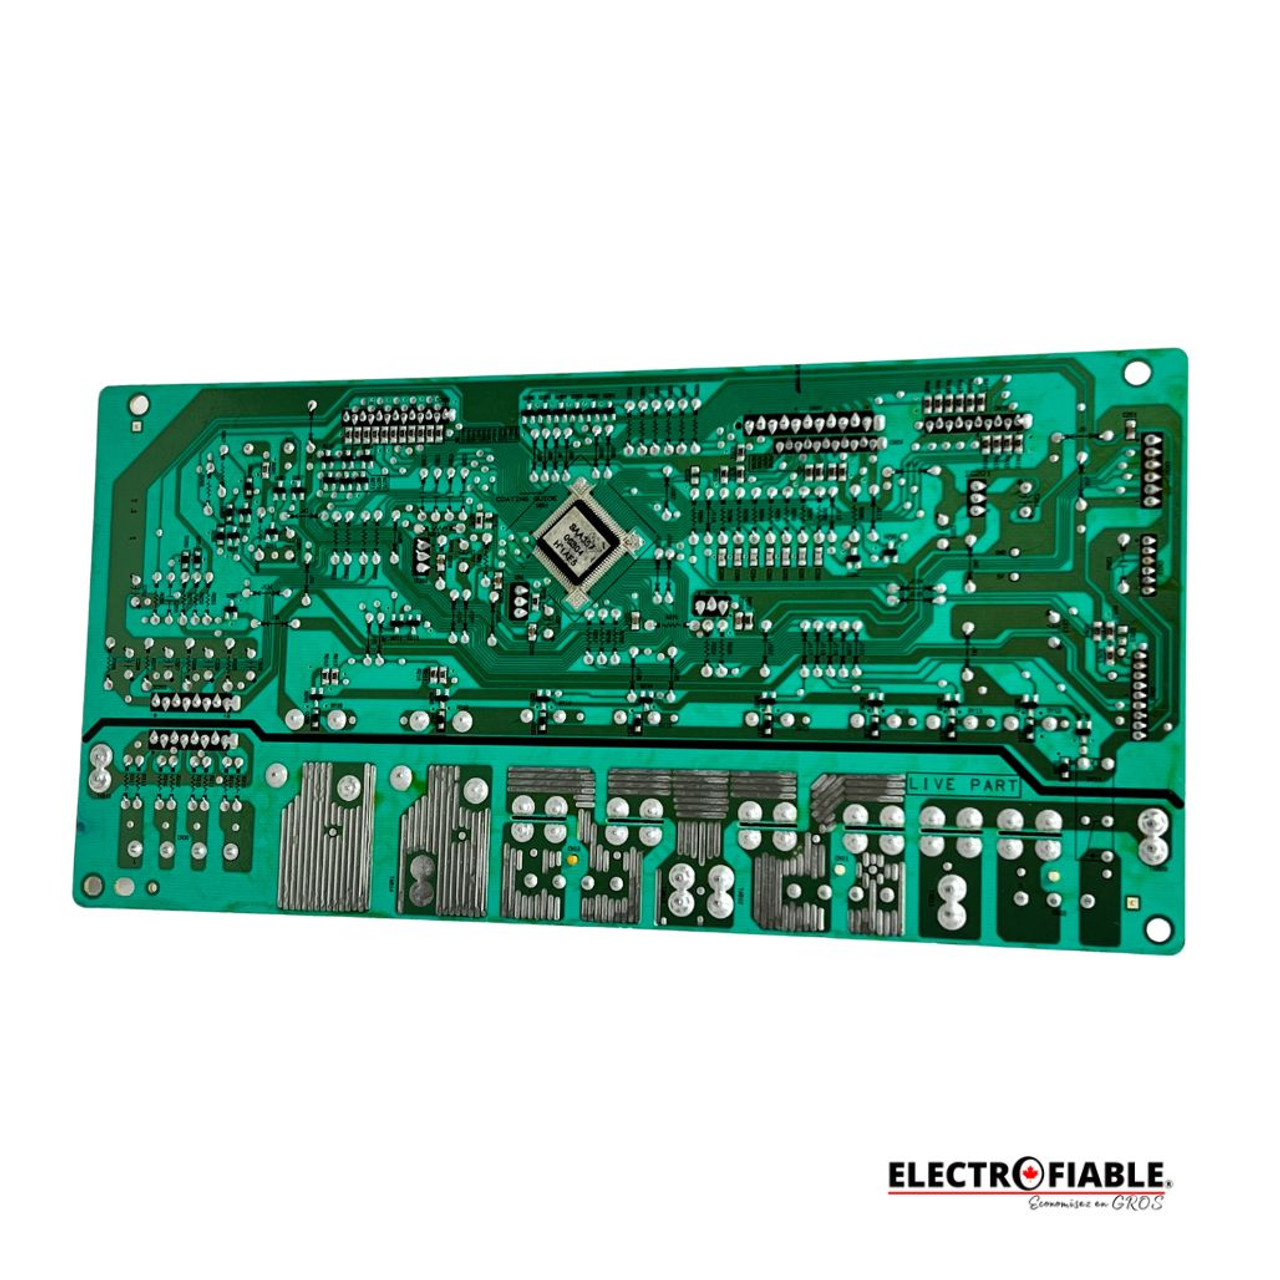 EBR73821007 LG Stove Main Control Board